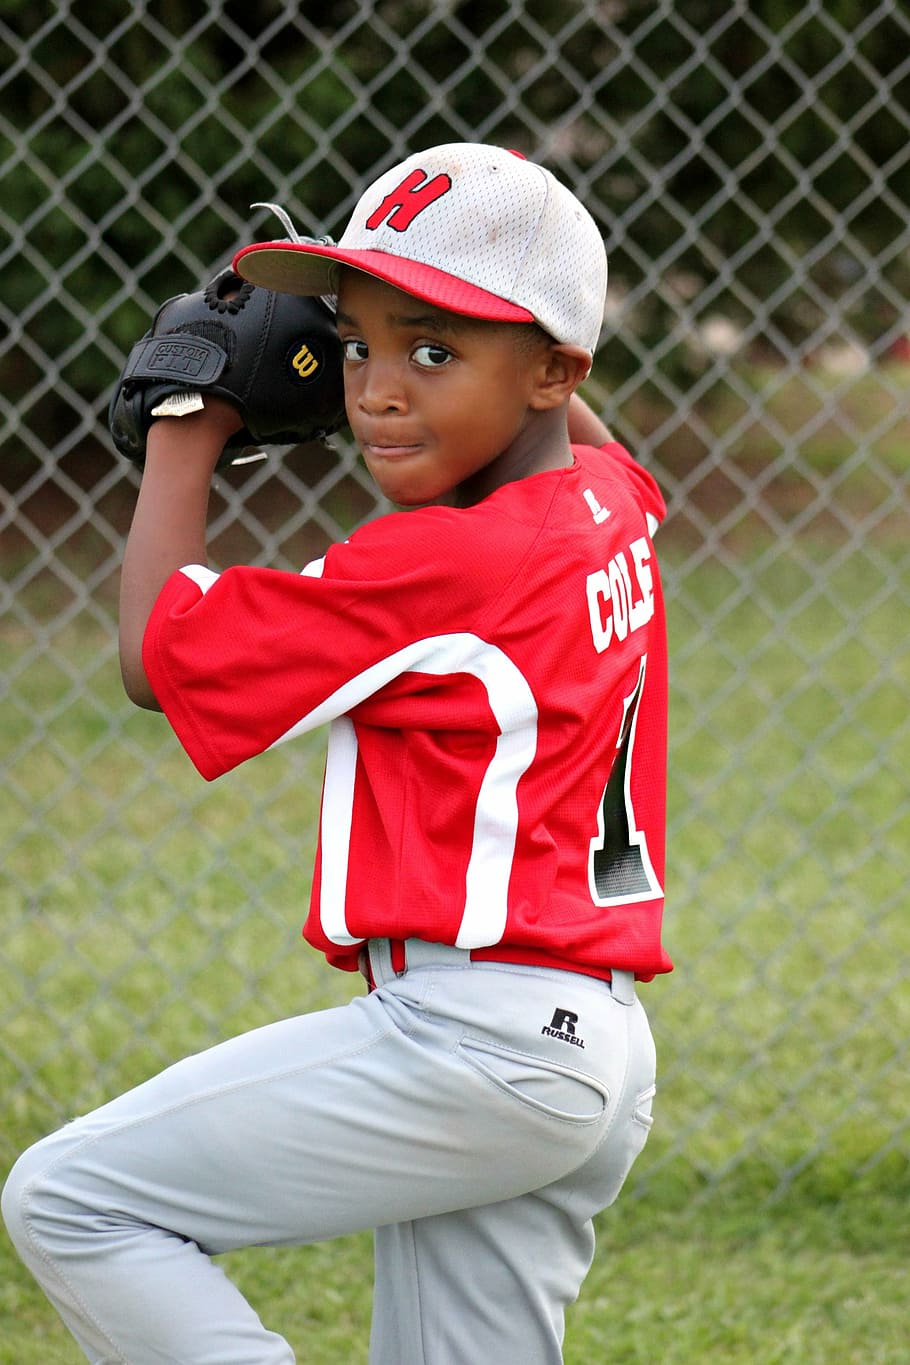 baseball player kid, wearing, red, white, jersey shirt, pants outfit, boy, player, baseball, pitcher